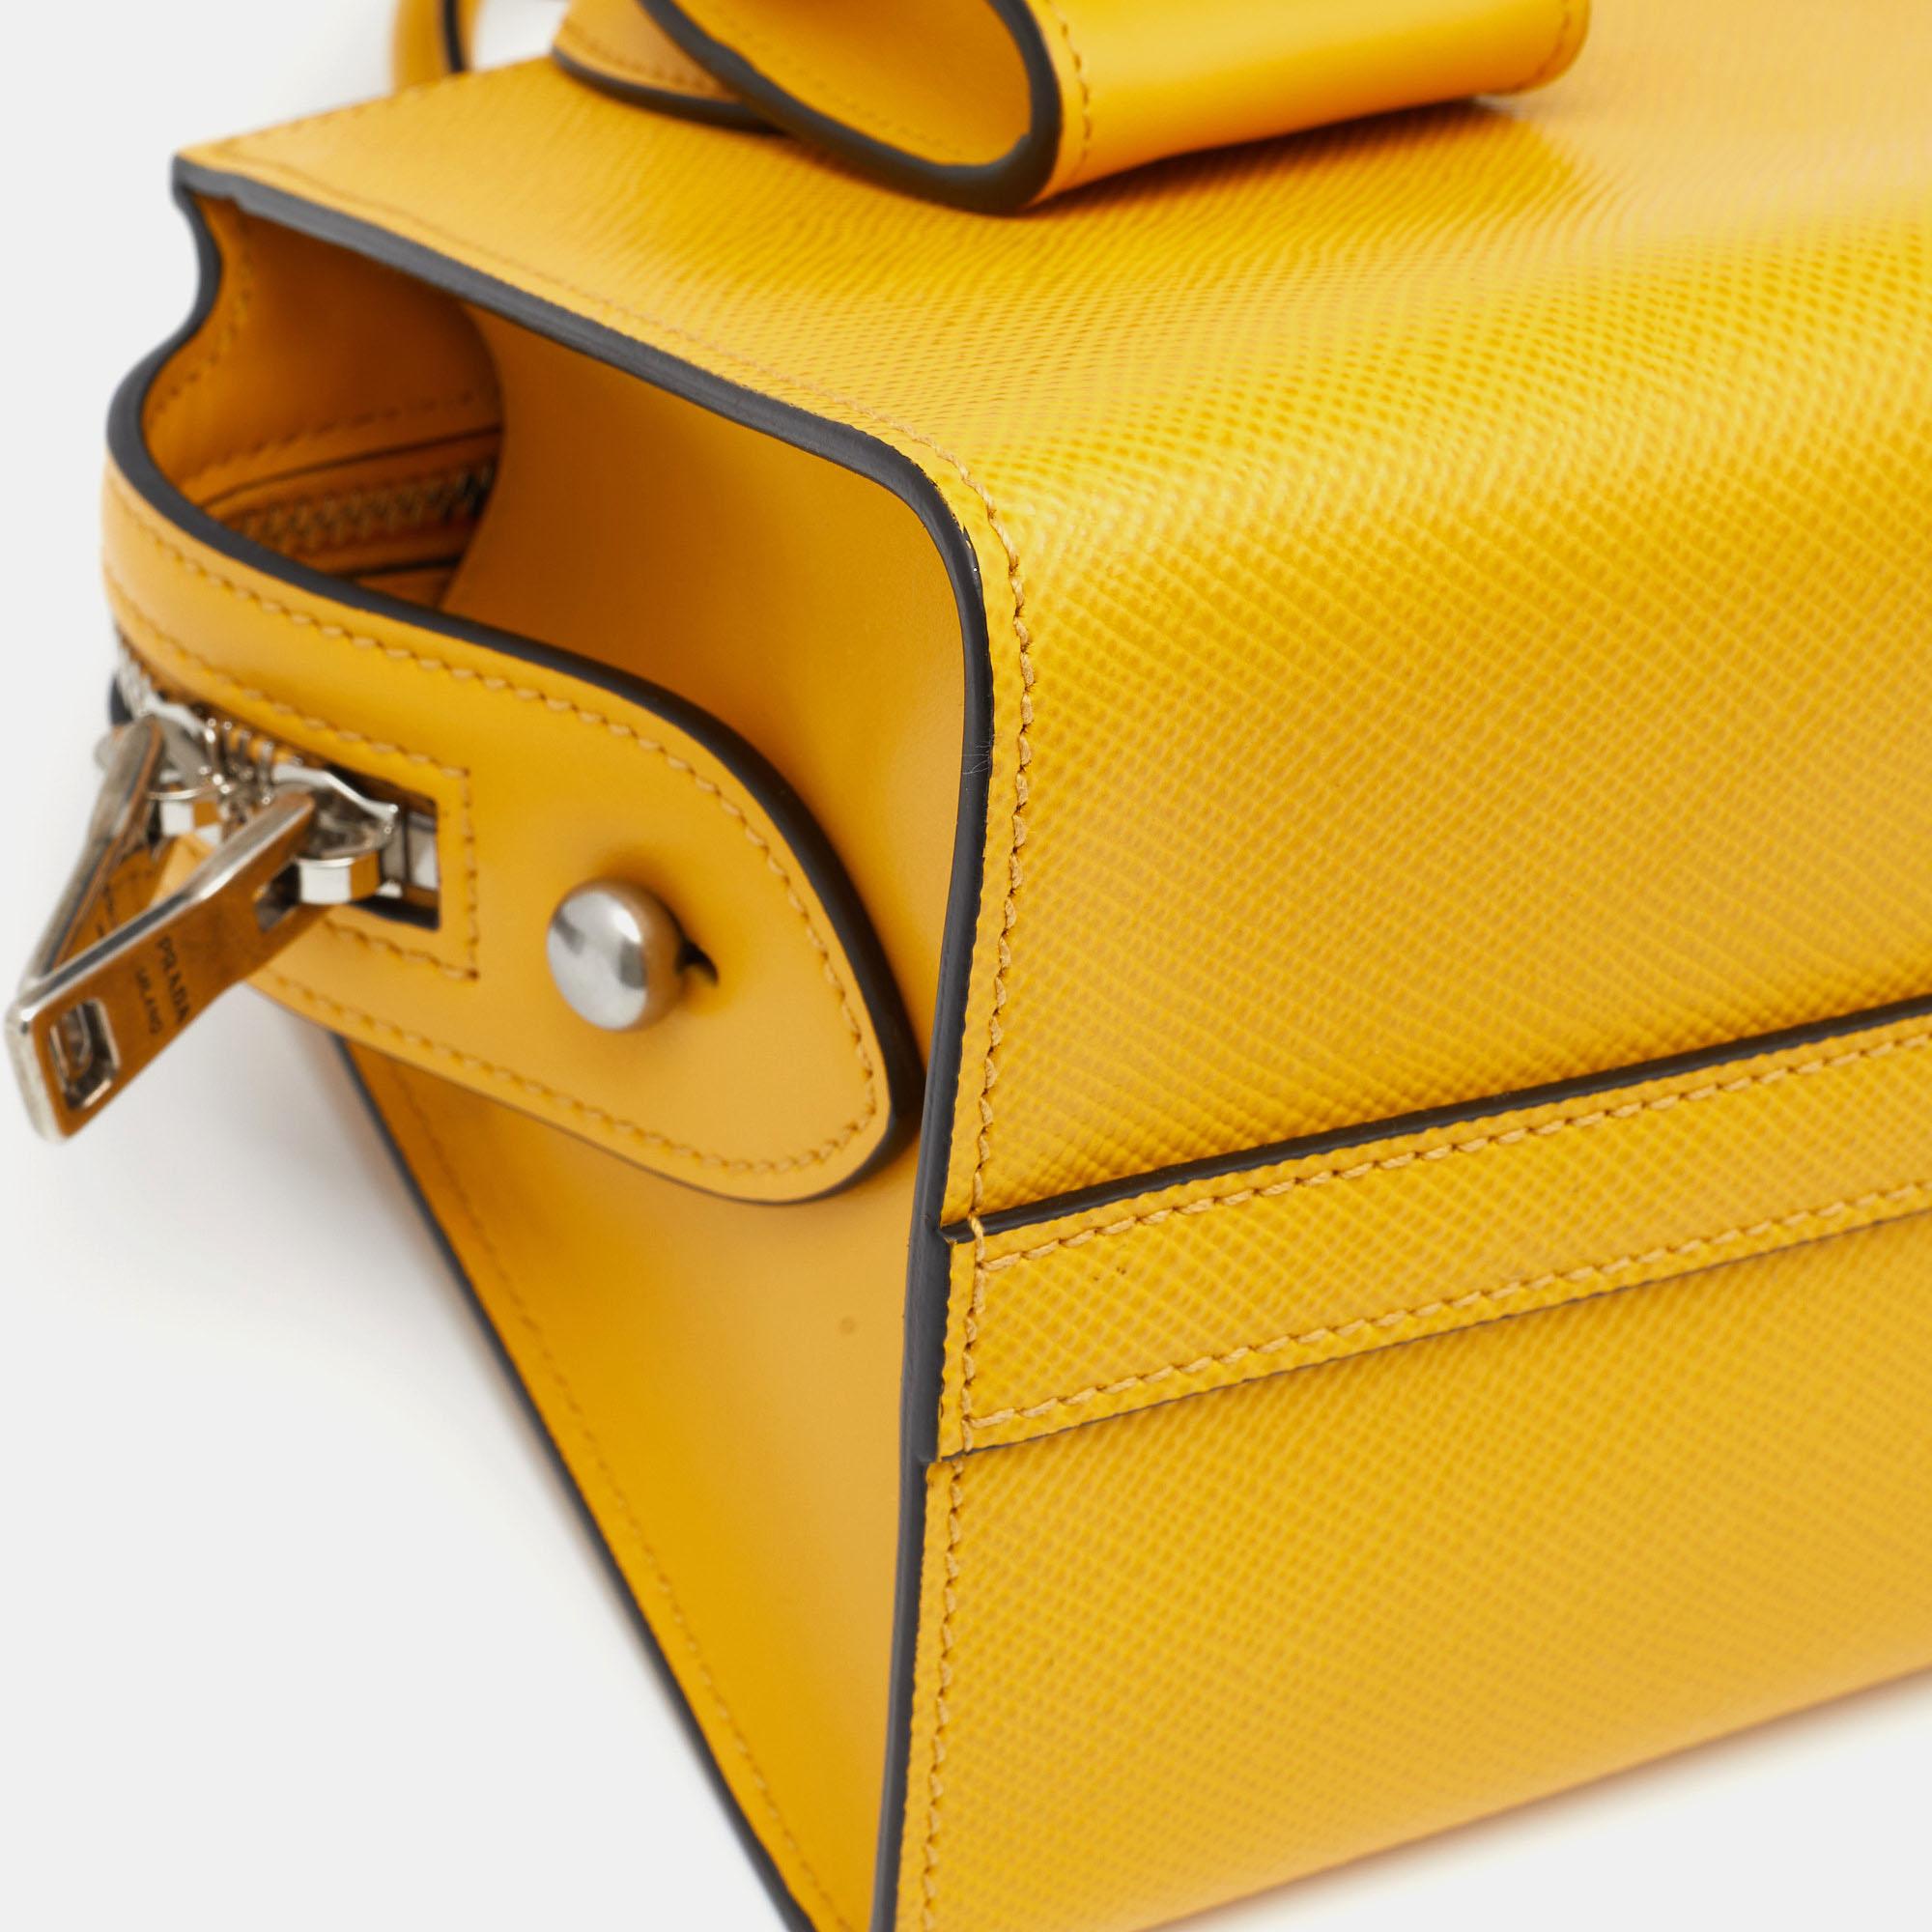 Prada Yellow Saffiano Cuir Leather Monochrome Satchel 4